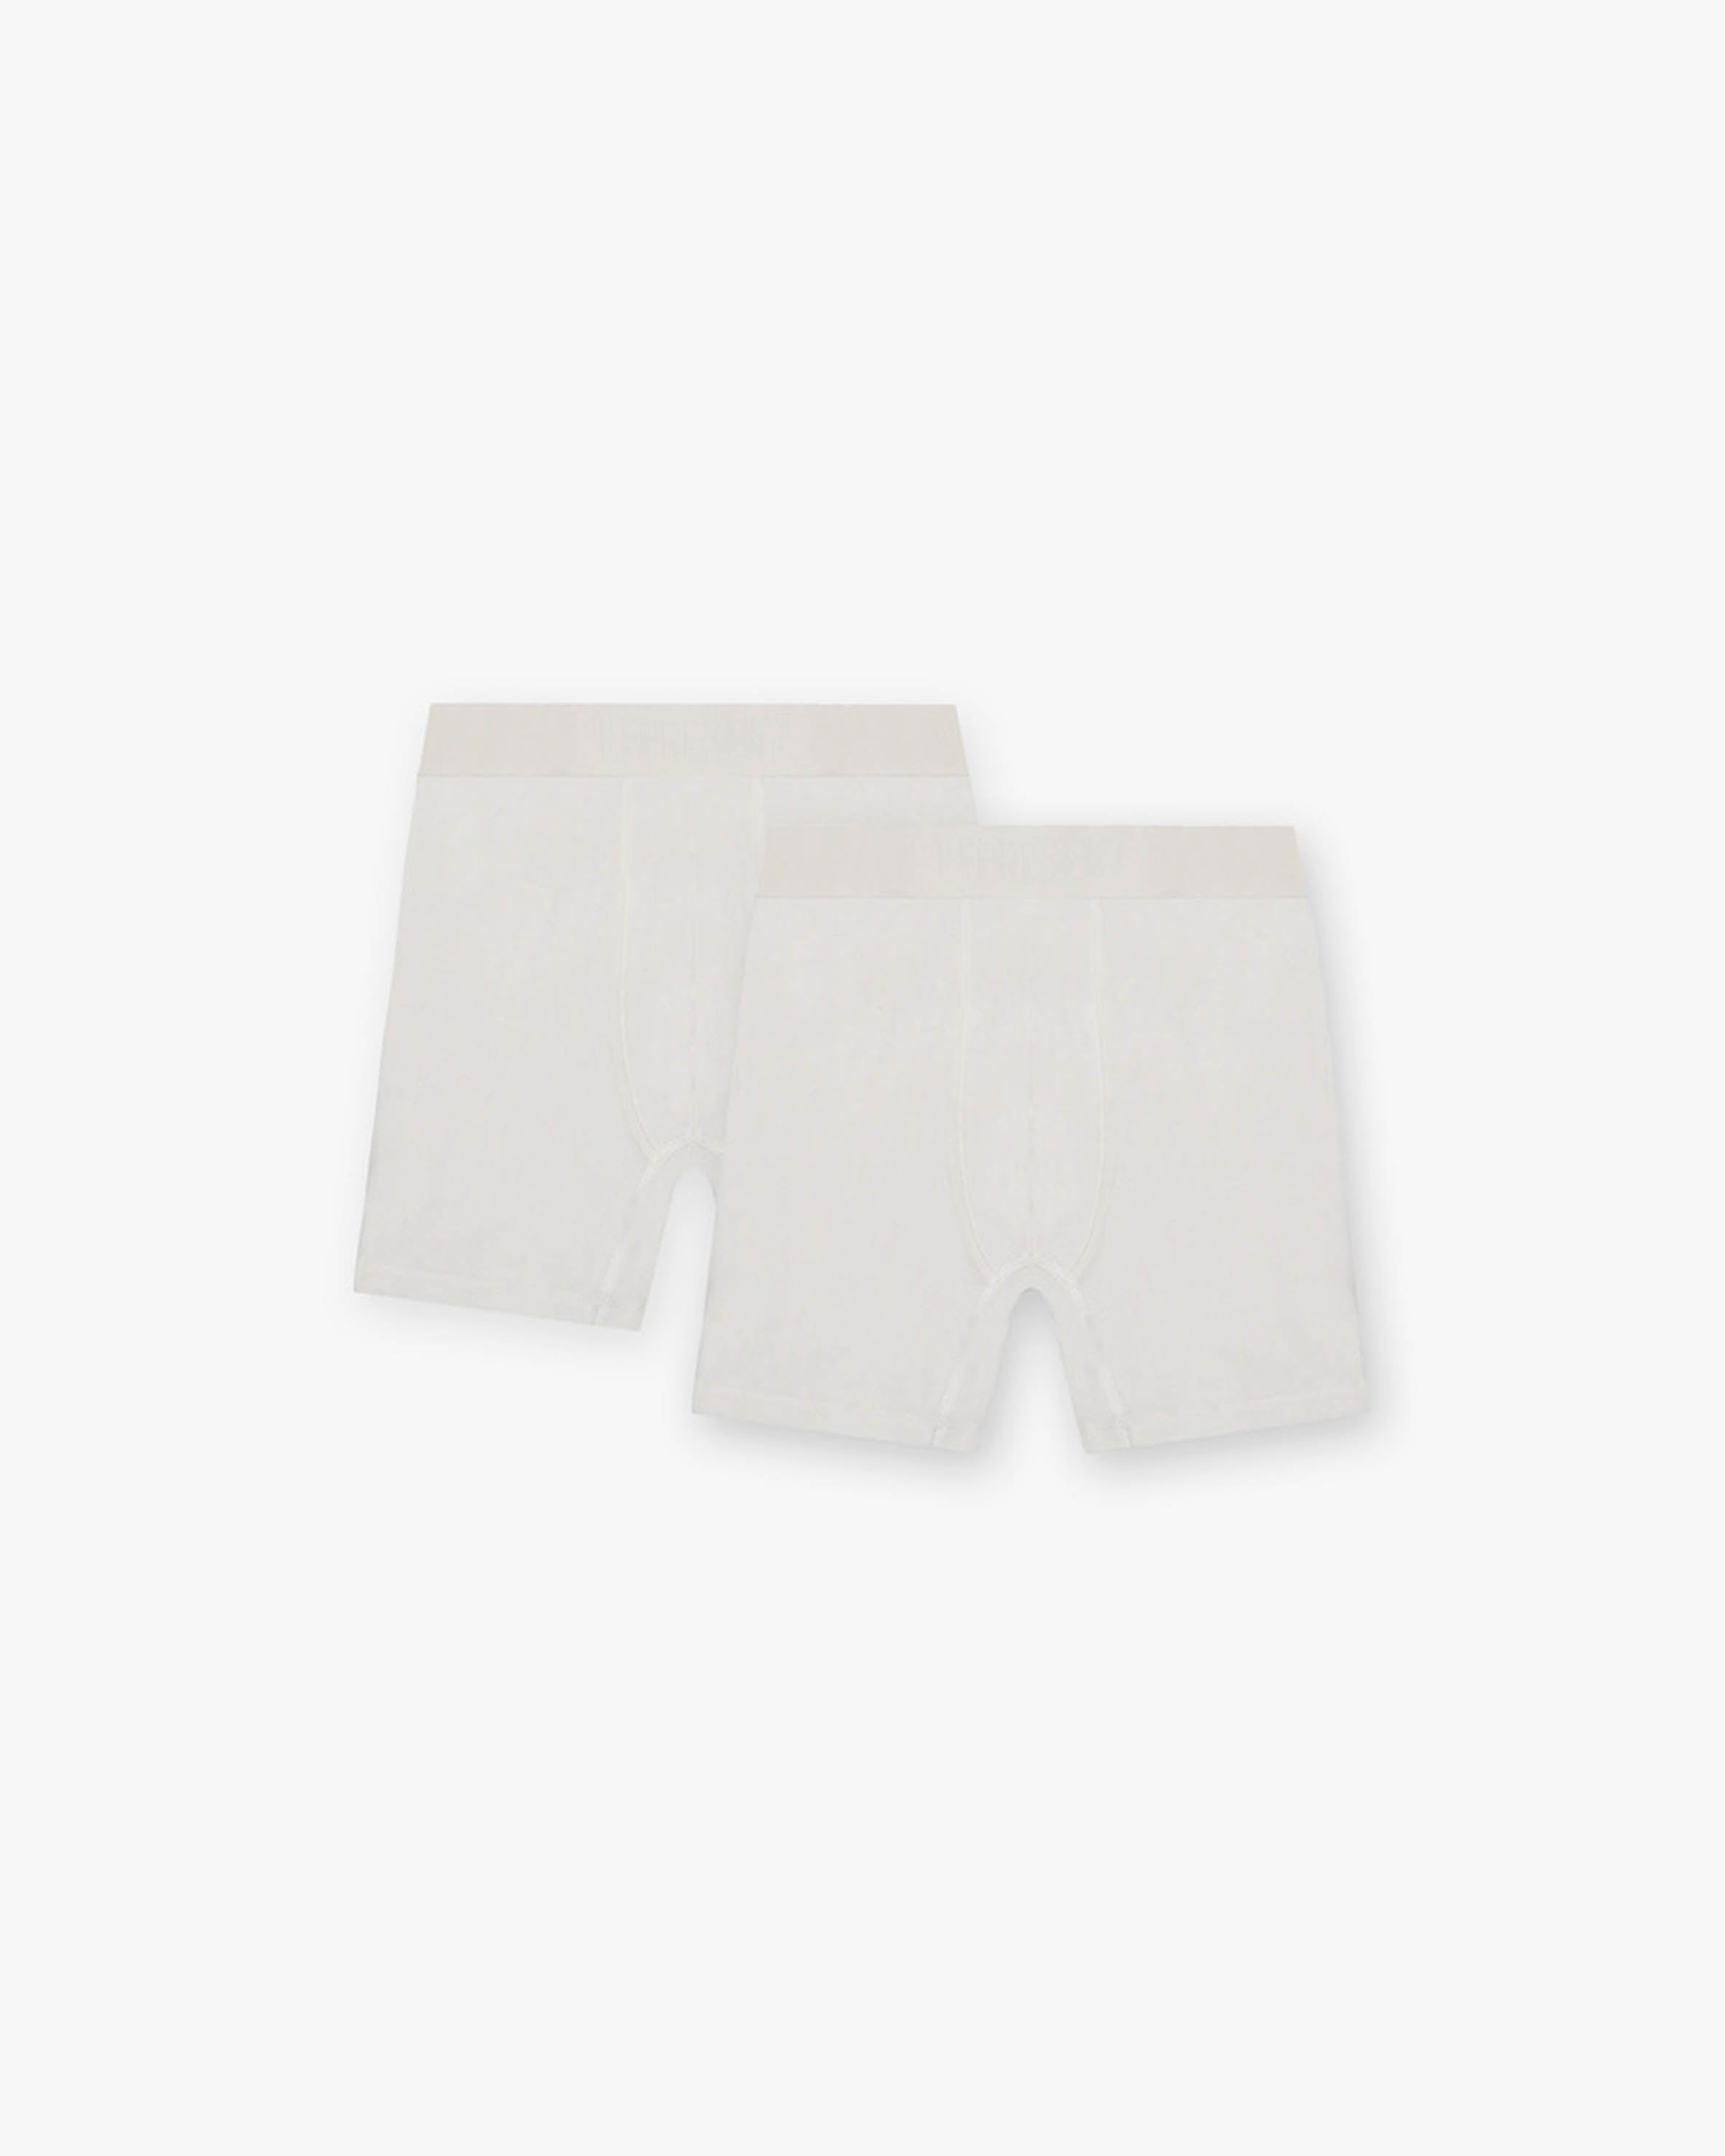 Represent Boxers 2 Pack | Triple Flat White Accessories FW22 | Represent Clo